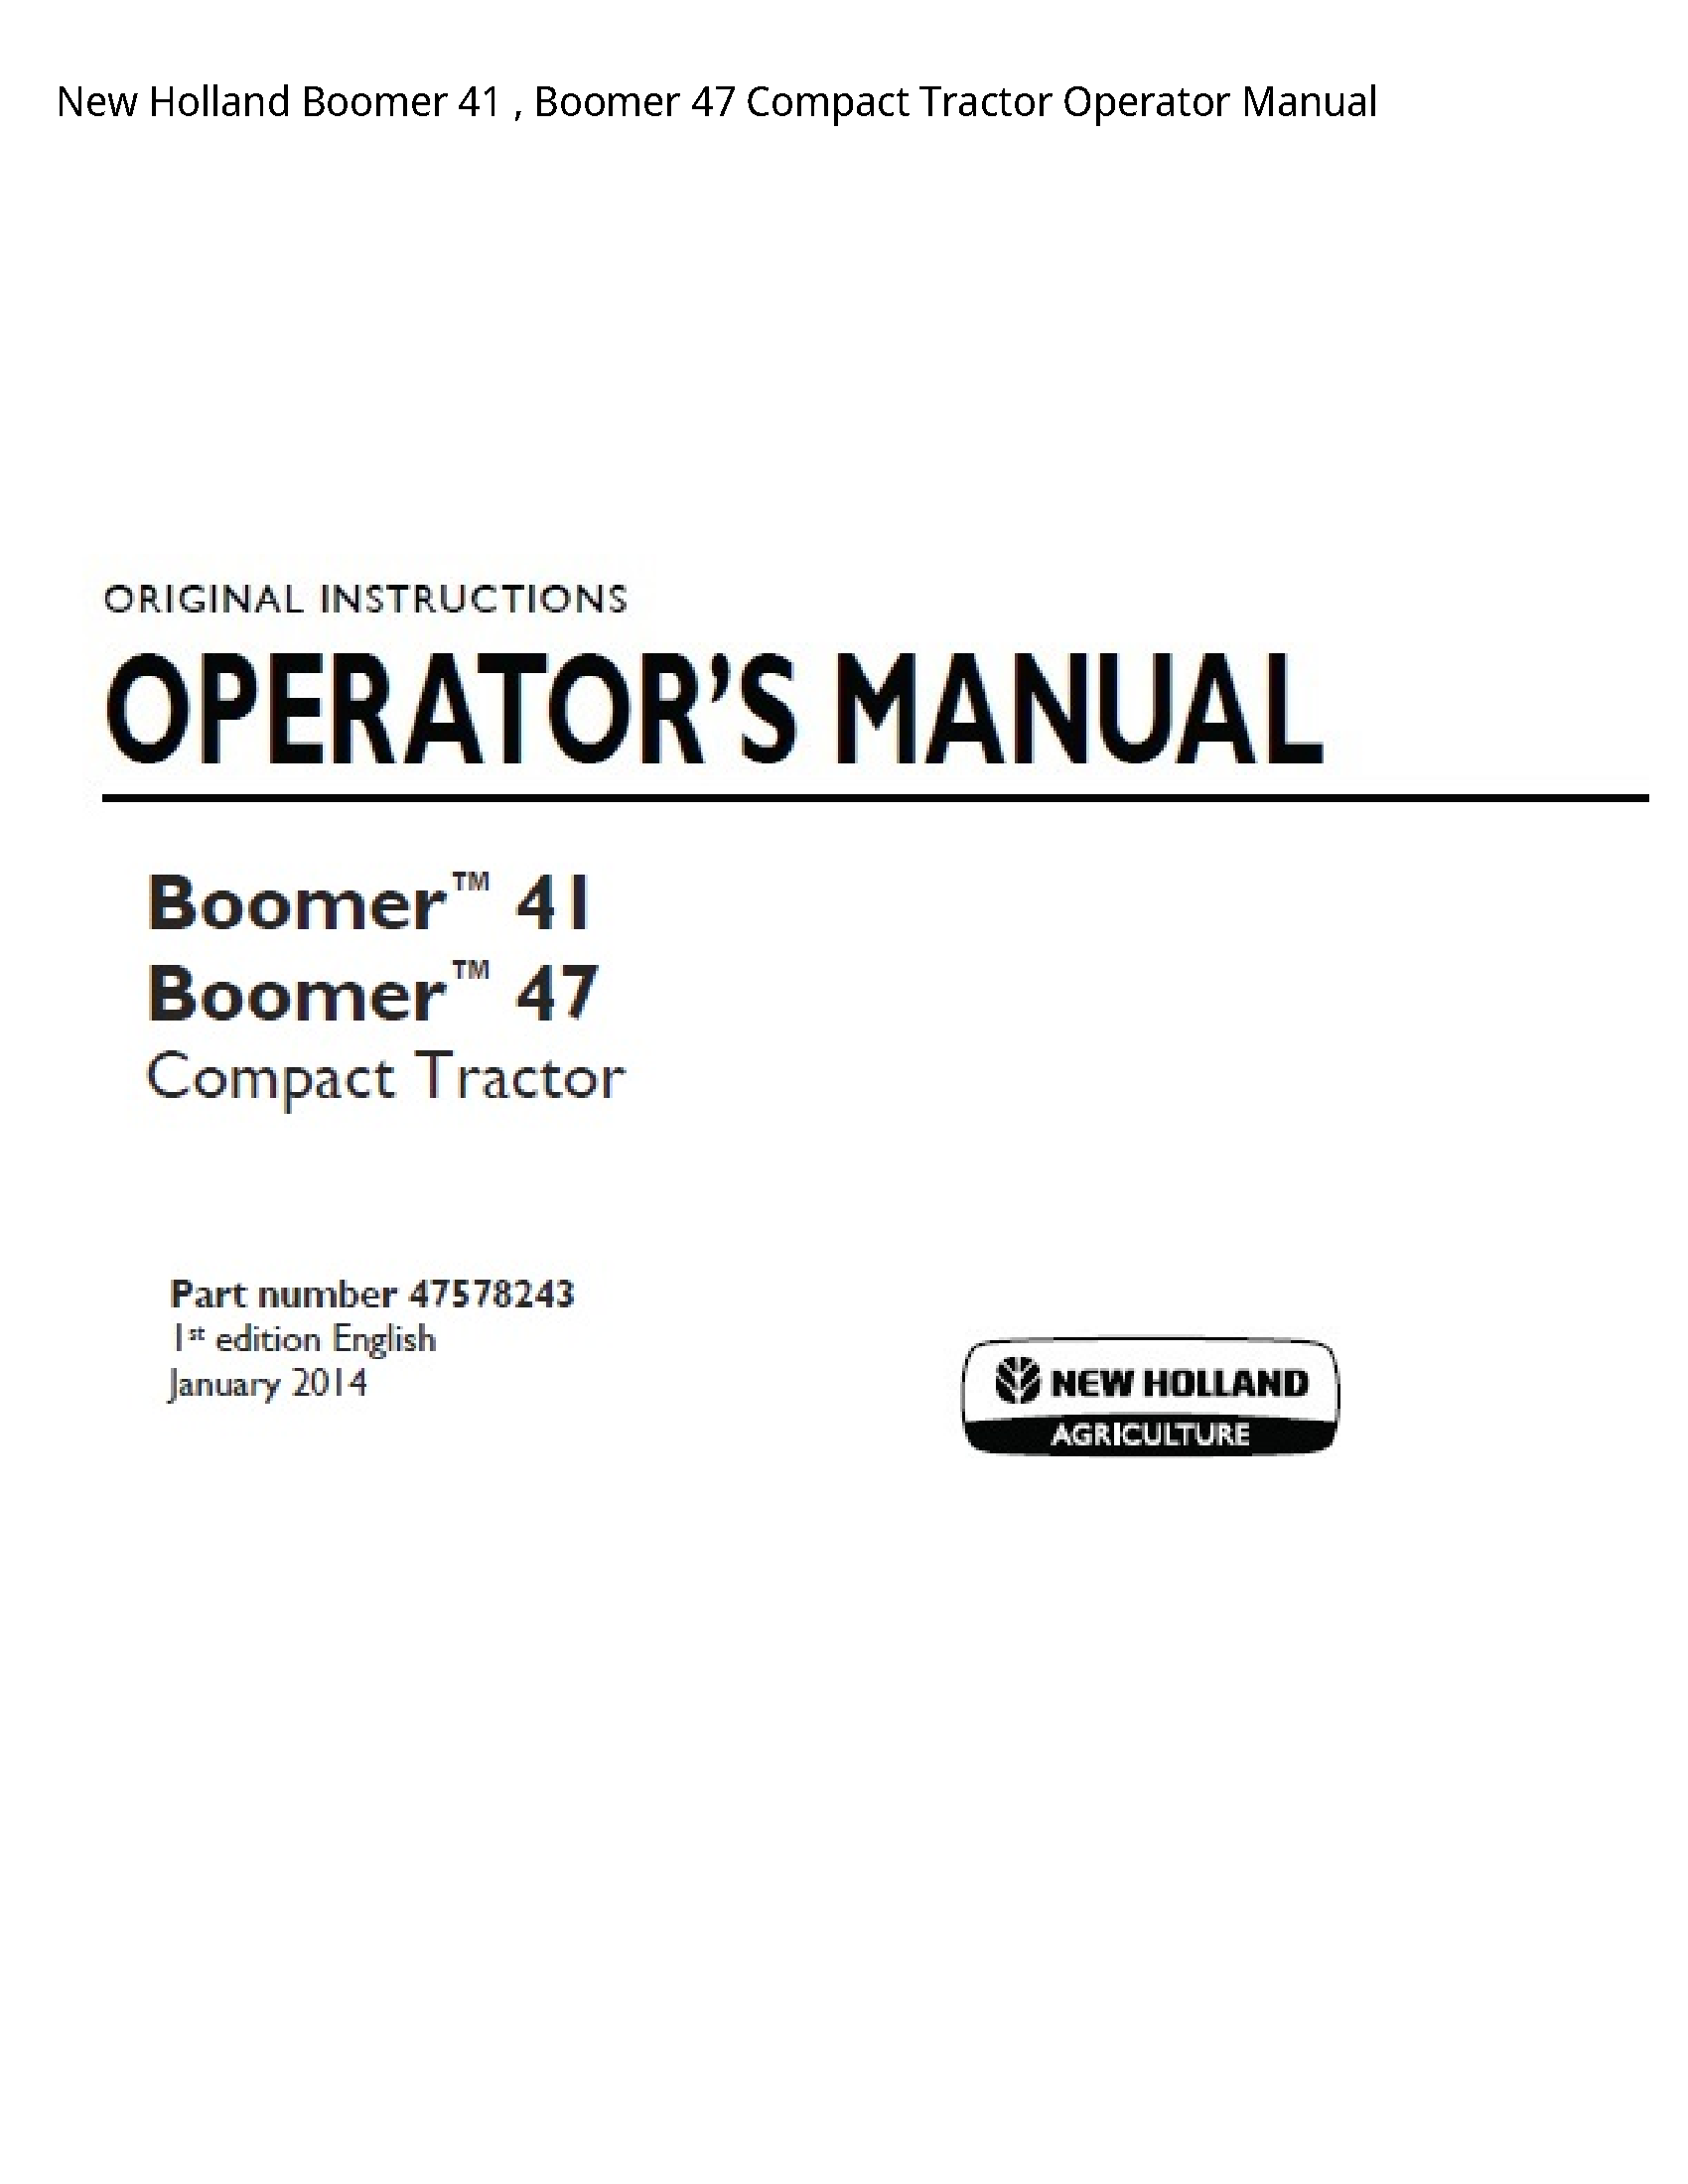 New Holland 41 Boomer Boomer Compact Tractor Operator manual